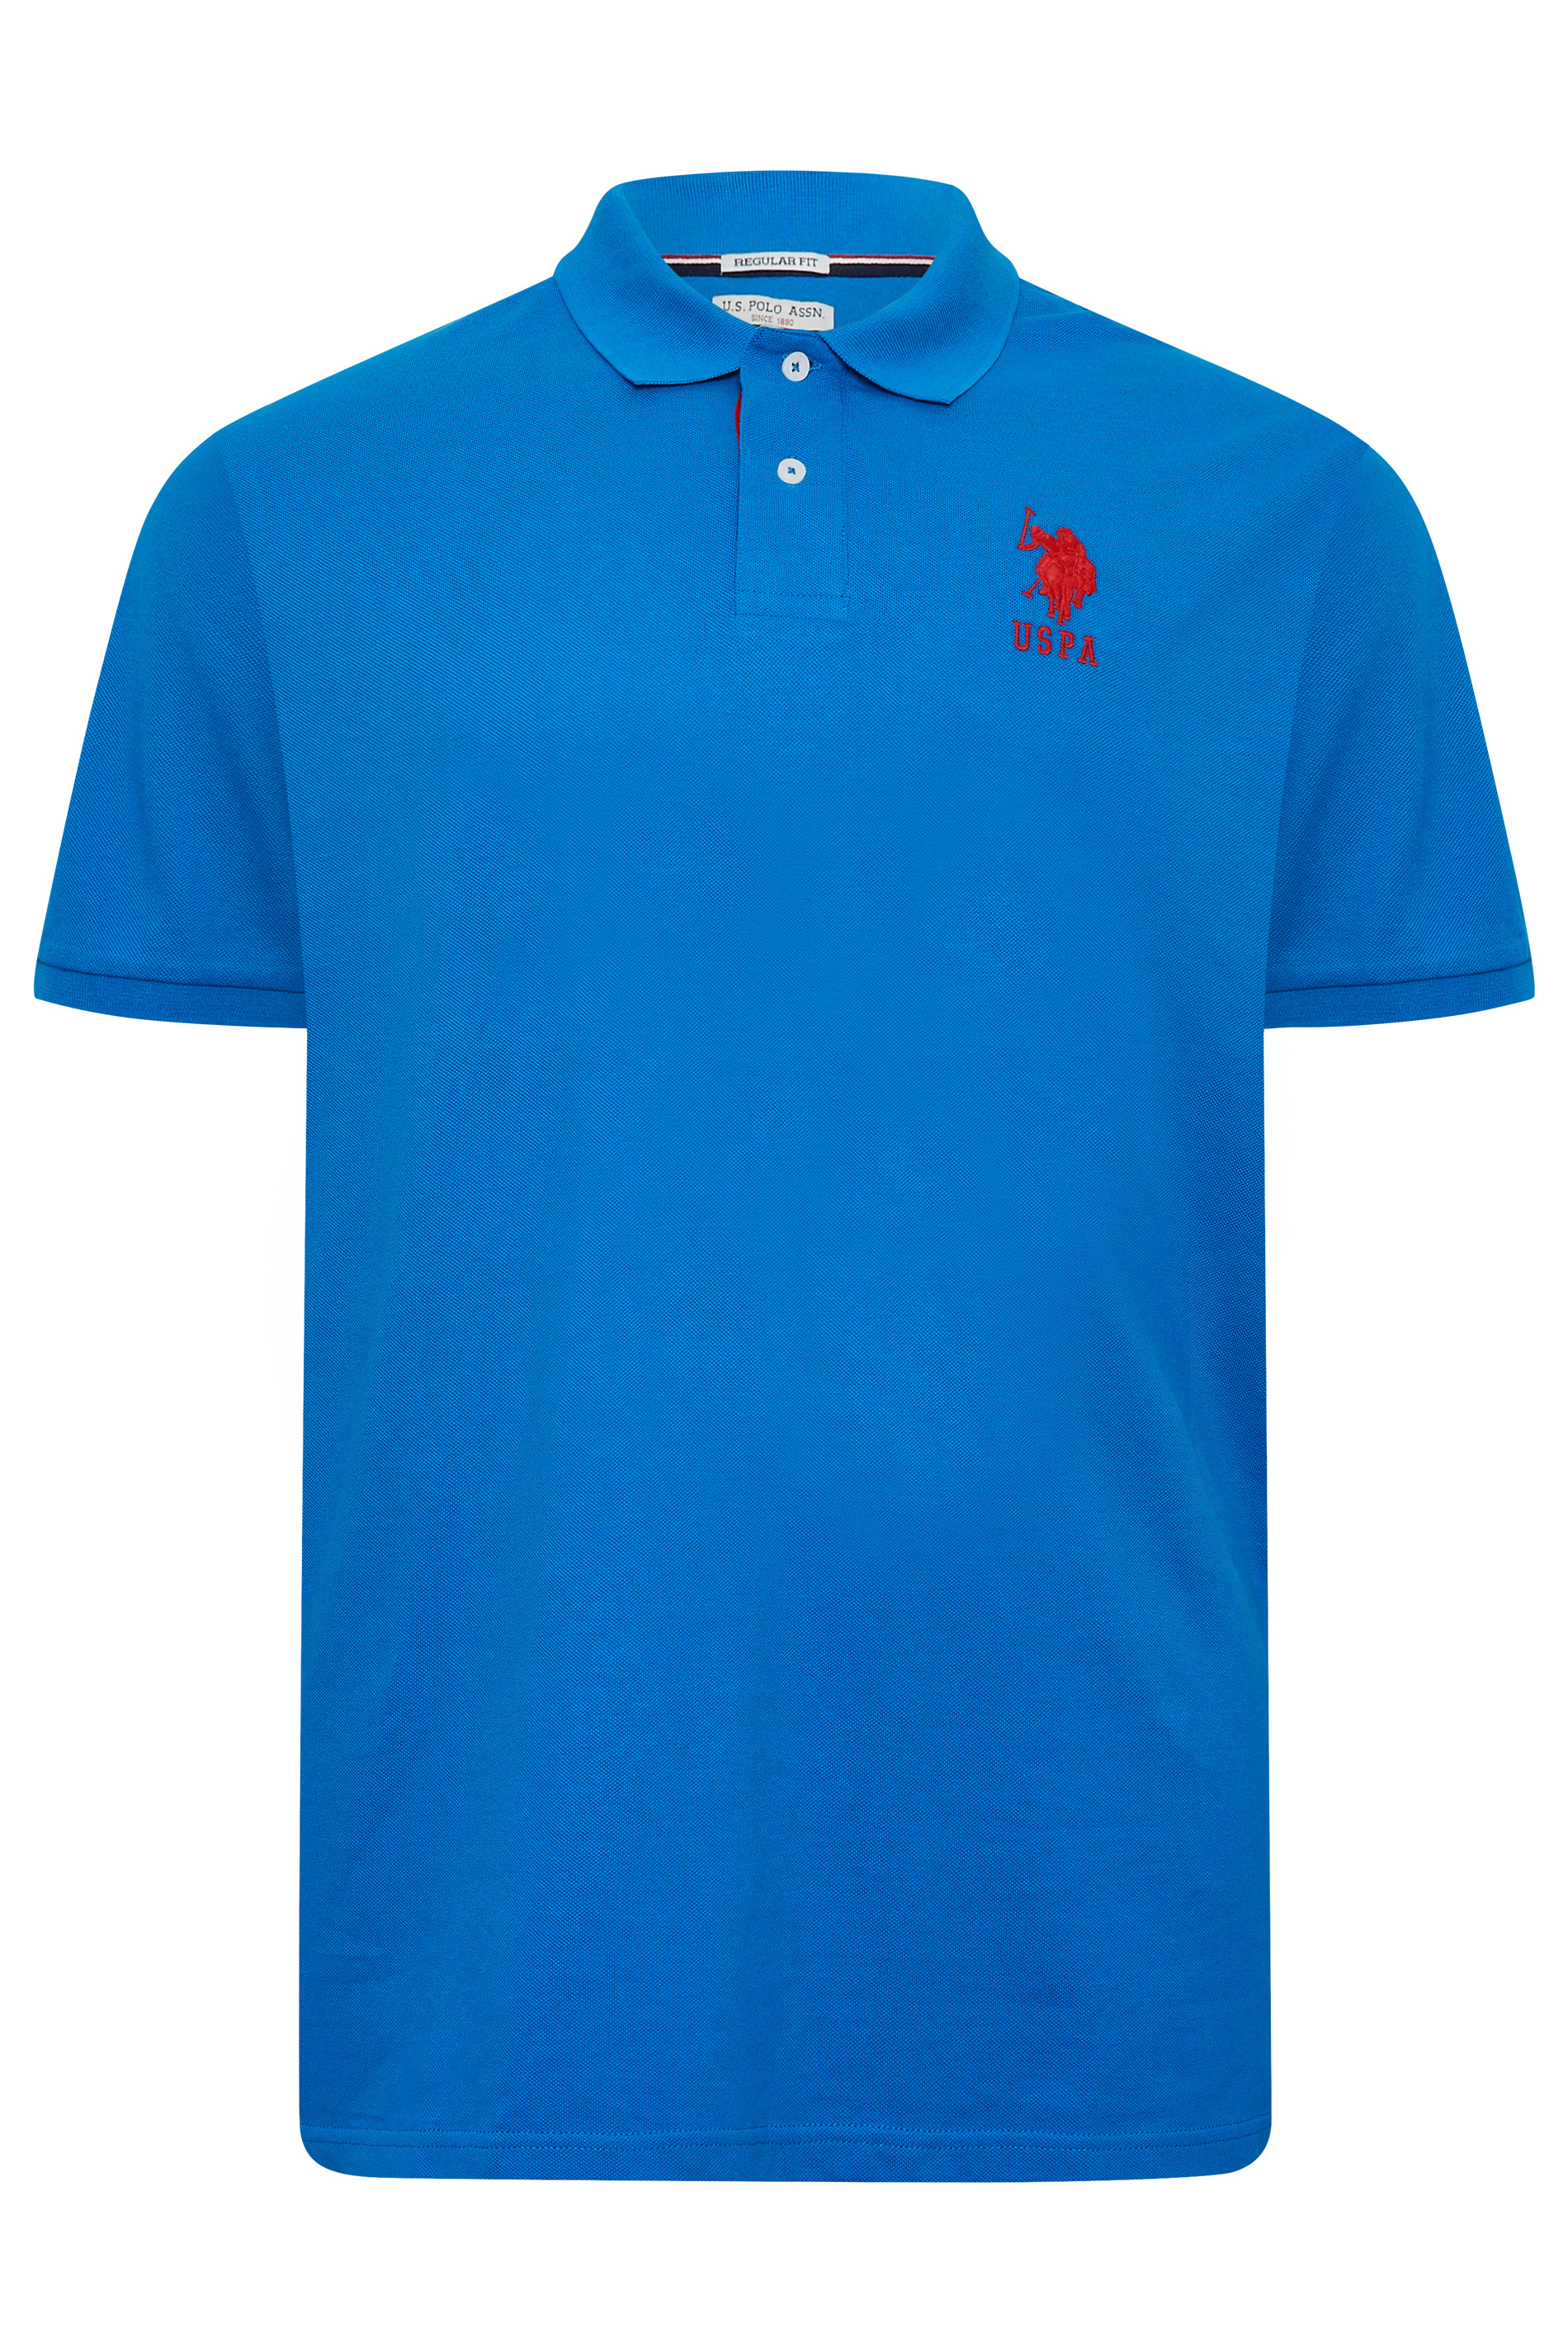 U.S. POLO ASSN. Big & Tall Blue Player 3 Logo Polo Shirt | BadRhino 3